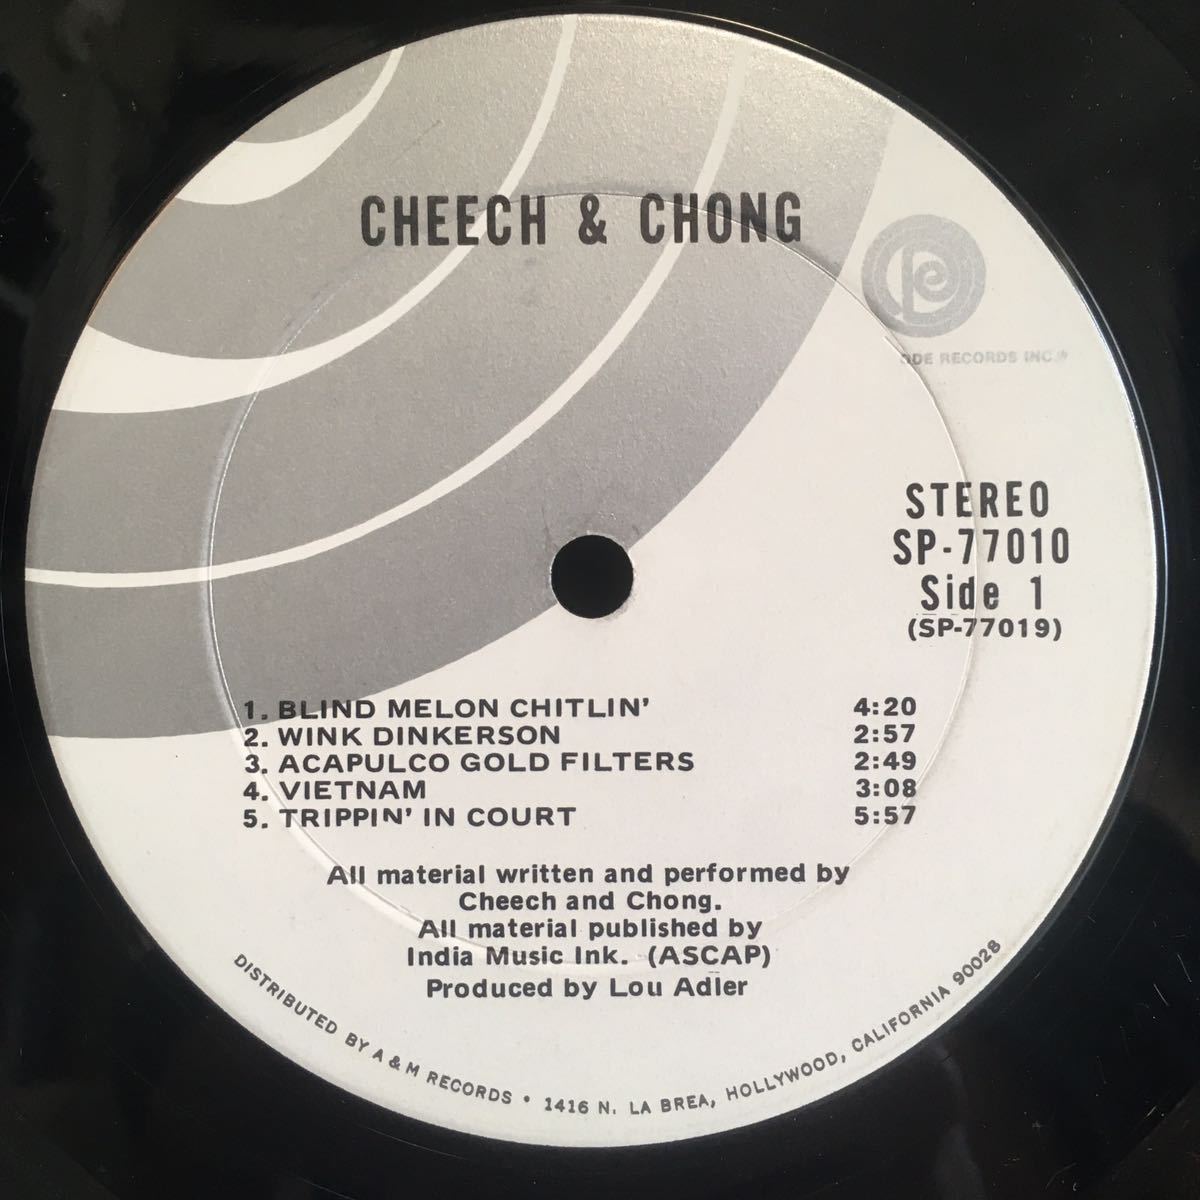 US LP / Cheech & Chong (chi-chi&chon) - Same / Comedy Spoken Ward Sampling / voice joke material sampling comedy movie /